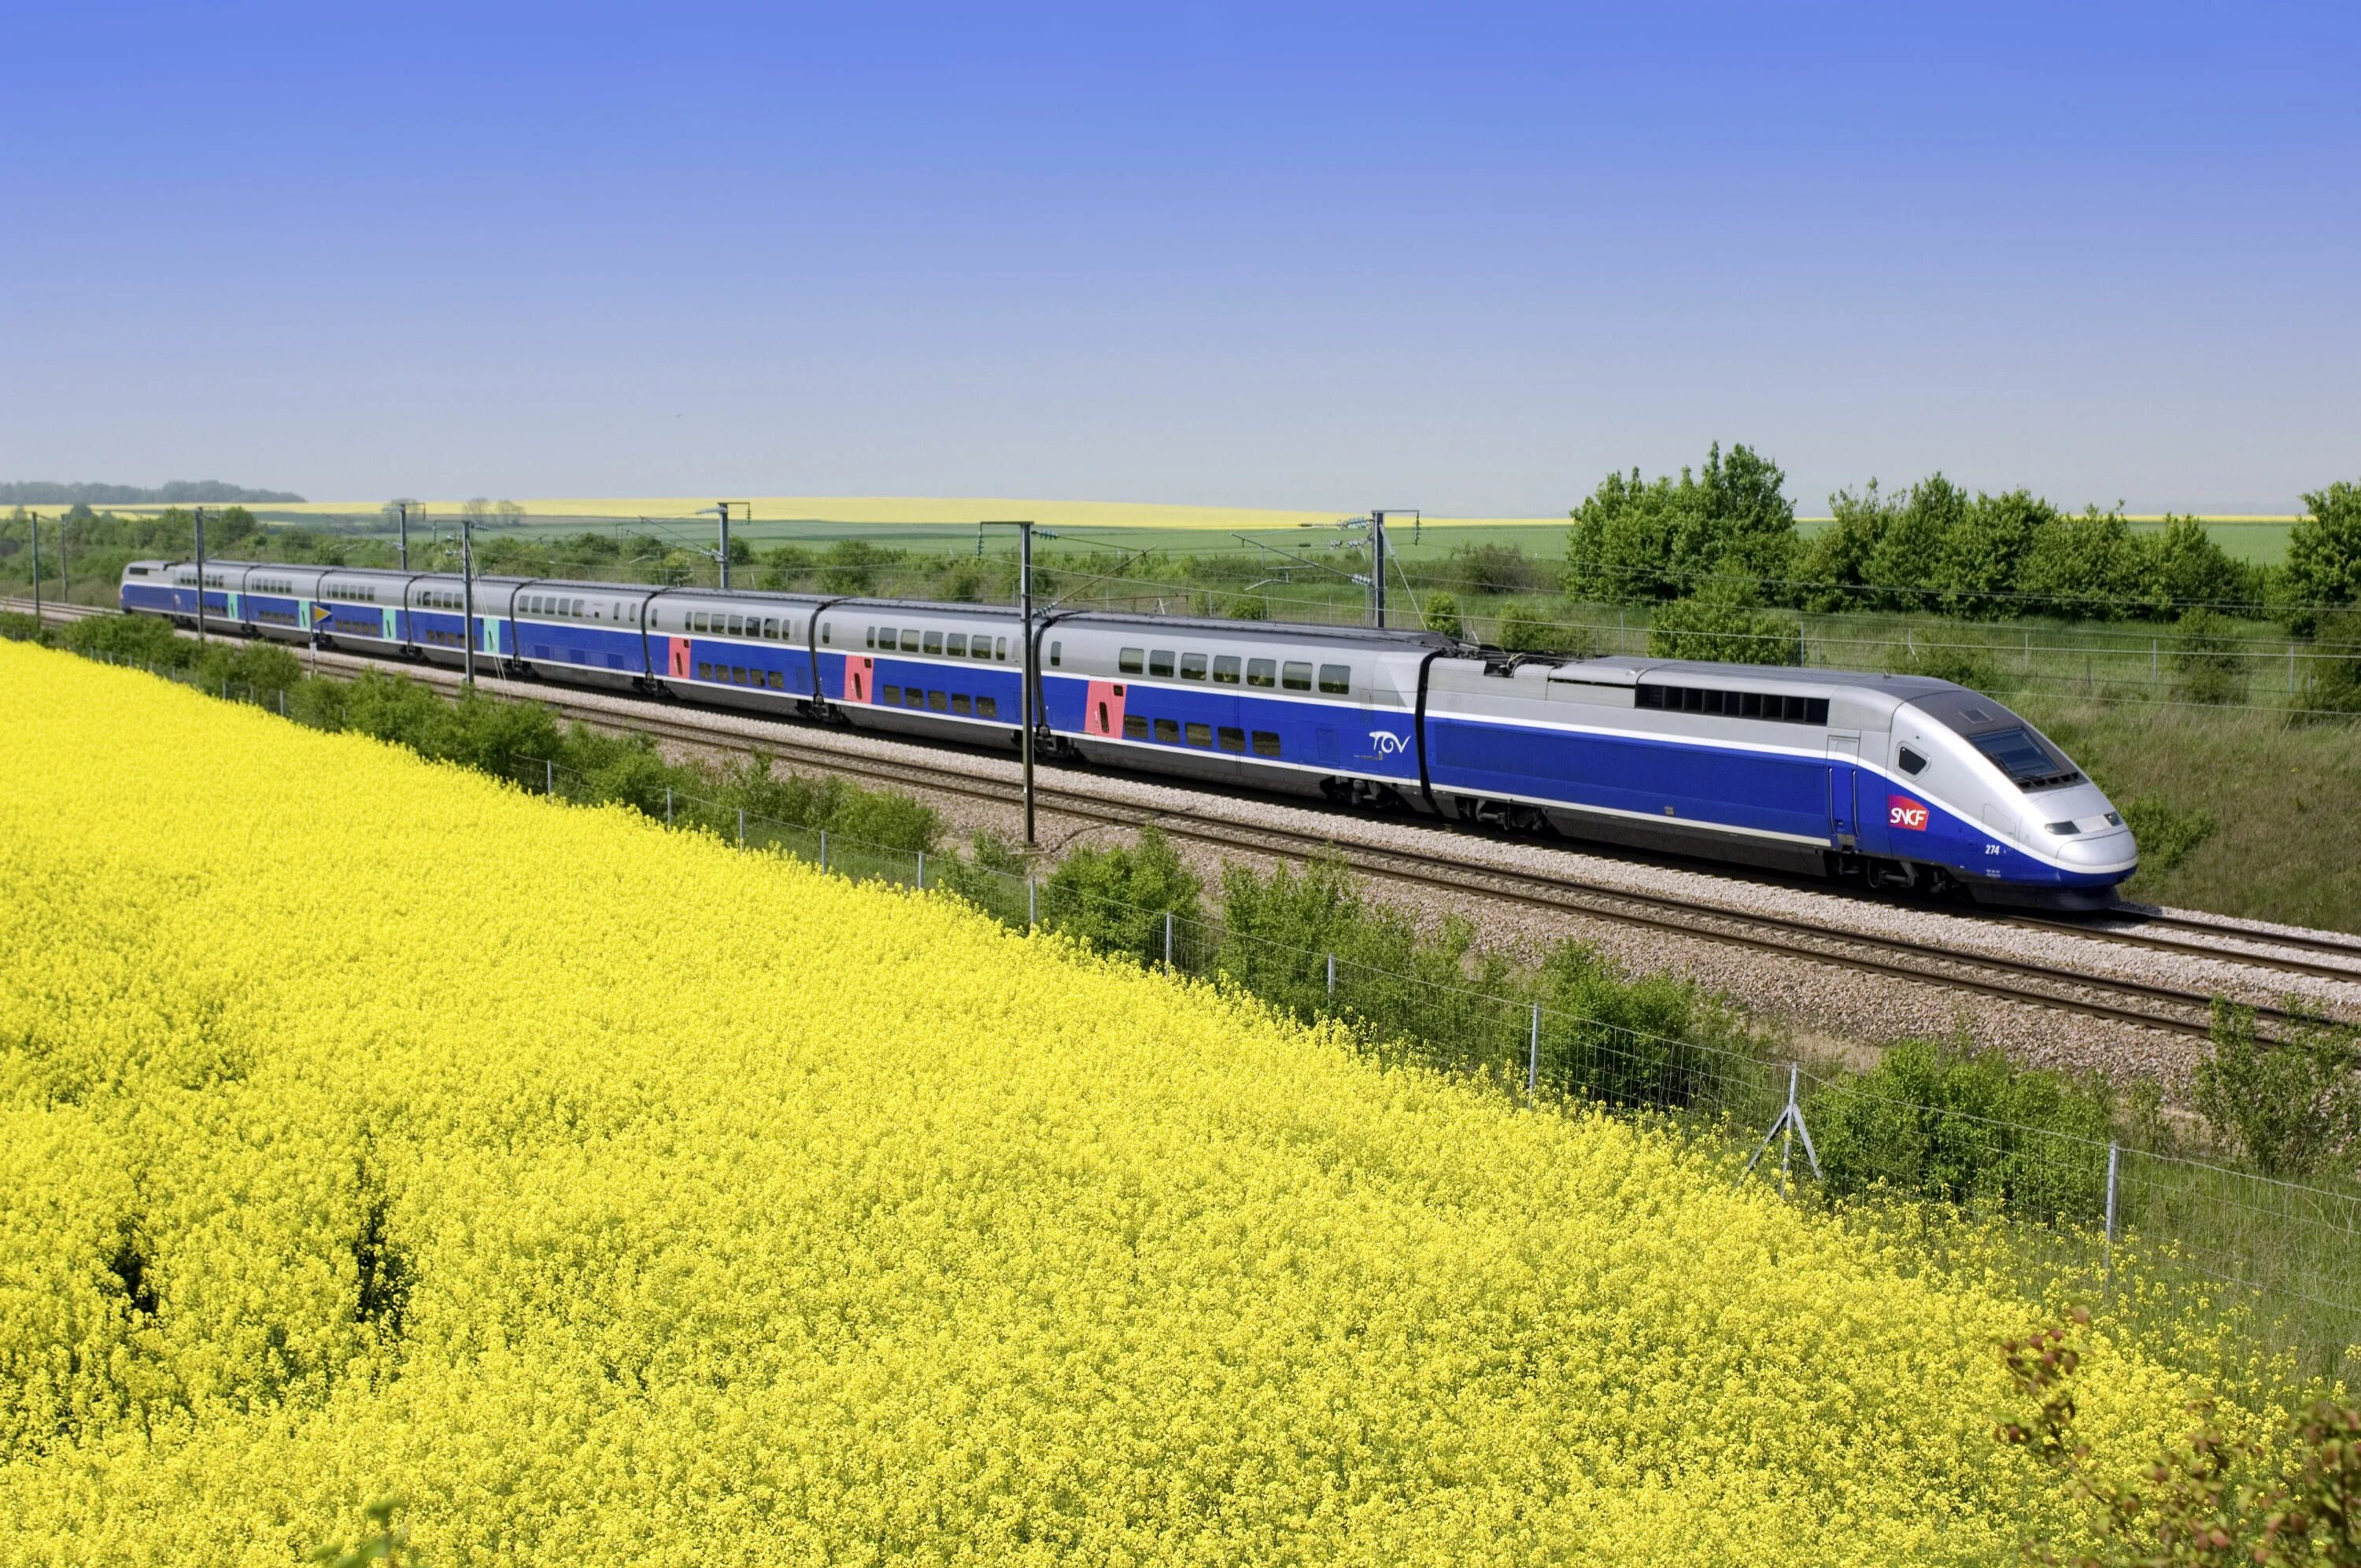 French train. Скоростной поезд TGV Франция. Французский поезд TGV. Поезд TGV Франция. ТГВ поезда Франция.